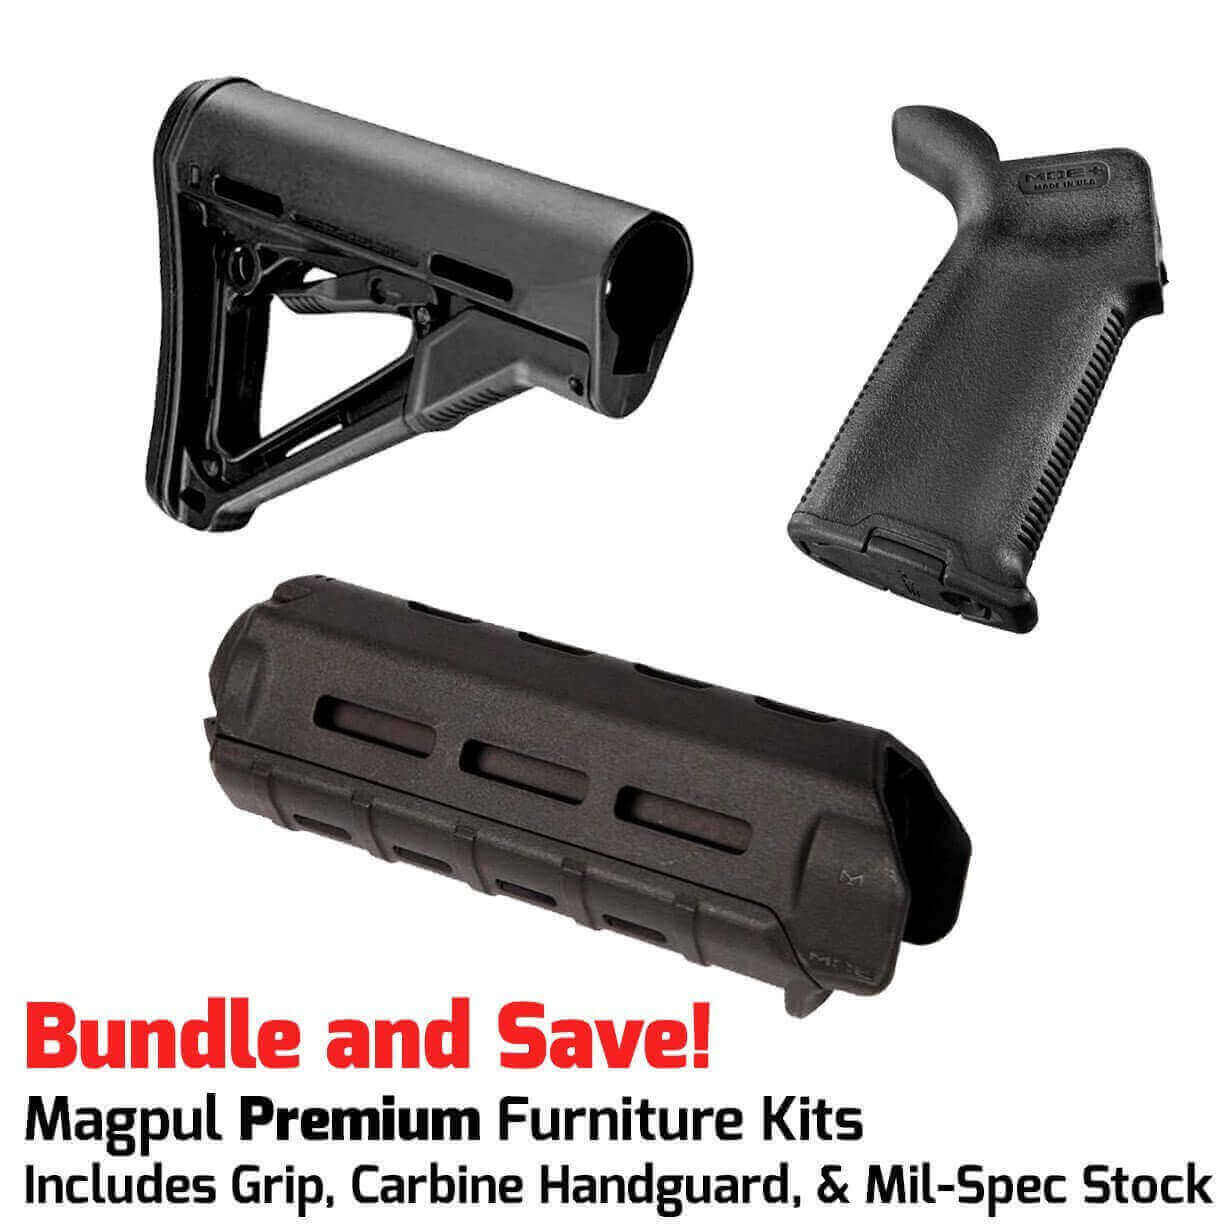 Furniture Kit: Team Accessories Corp. AR Butt Stock M4 Style + Davidson  Defense AR-15 'Bones' Polymer Grip